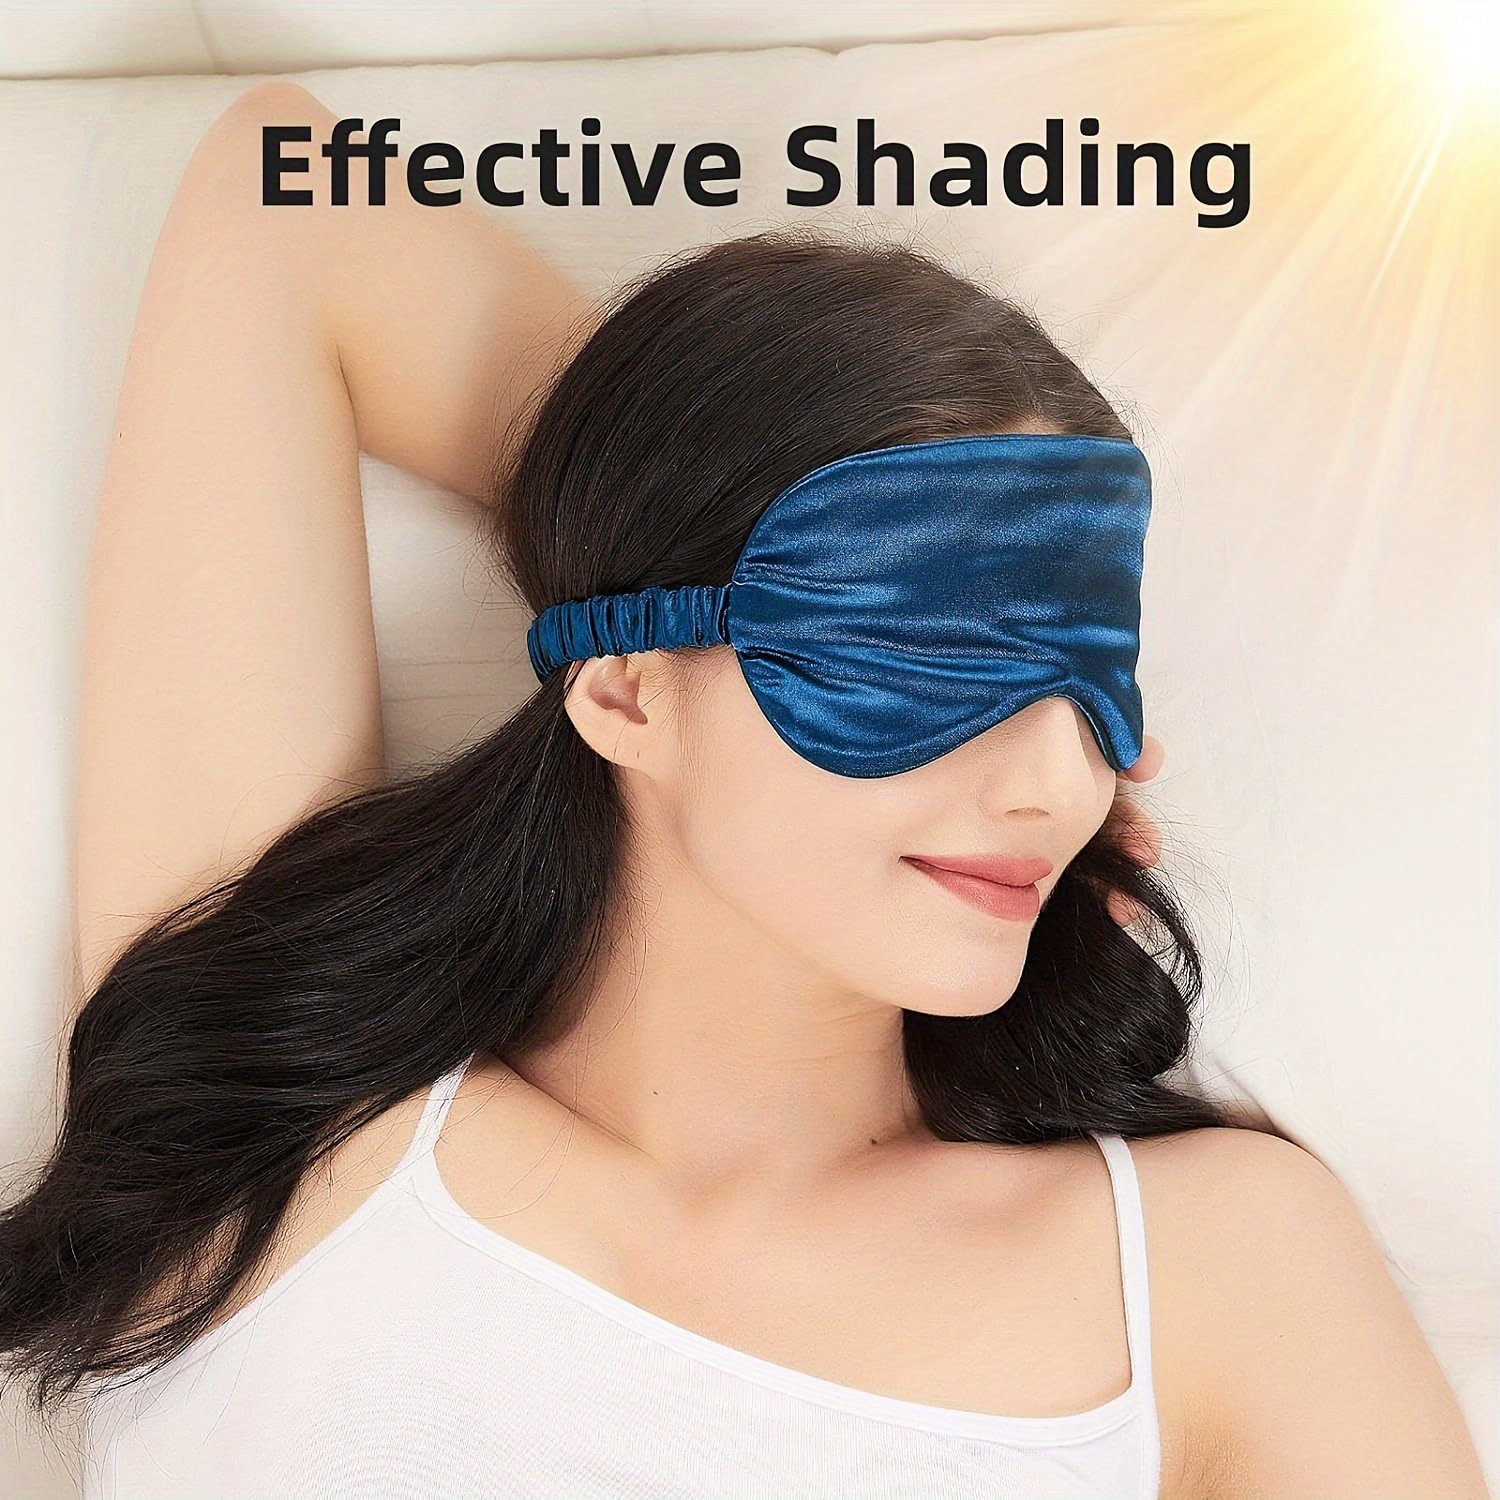 Mulberry Silk Sleep Eye Mask & Blindfold with Elastic Strap/Headband, Soft  Eye Cover Eyeshade for Night Sleeping, Travel, Nap(Pink)